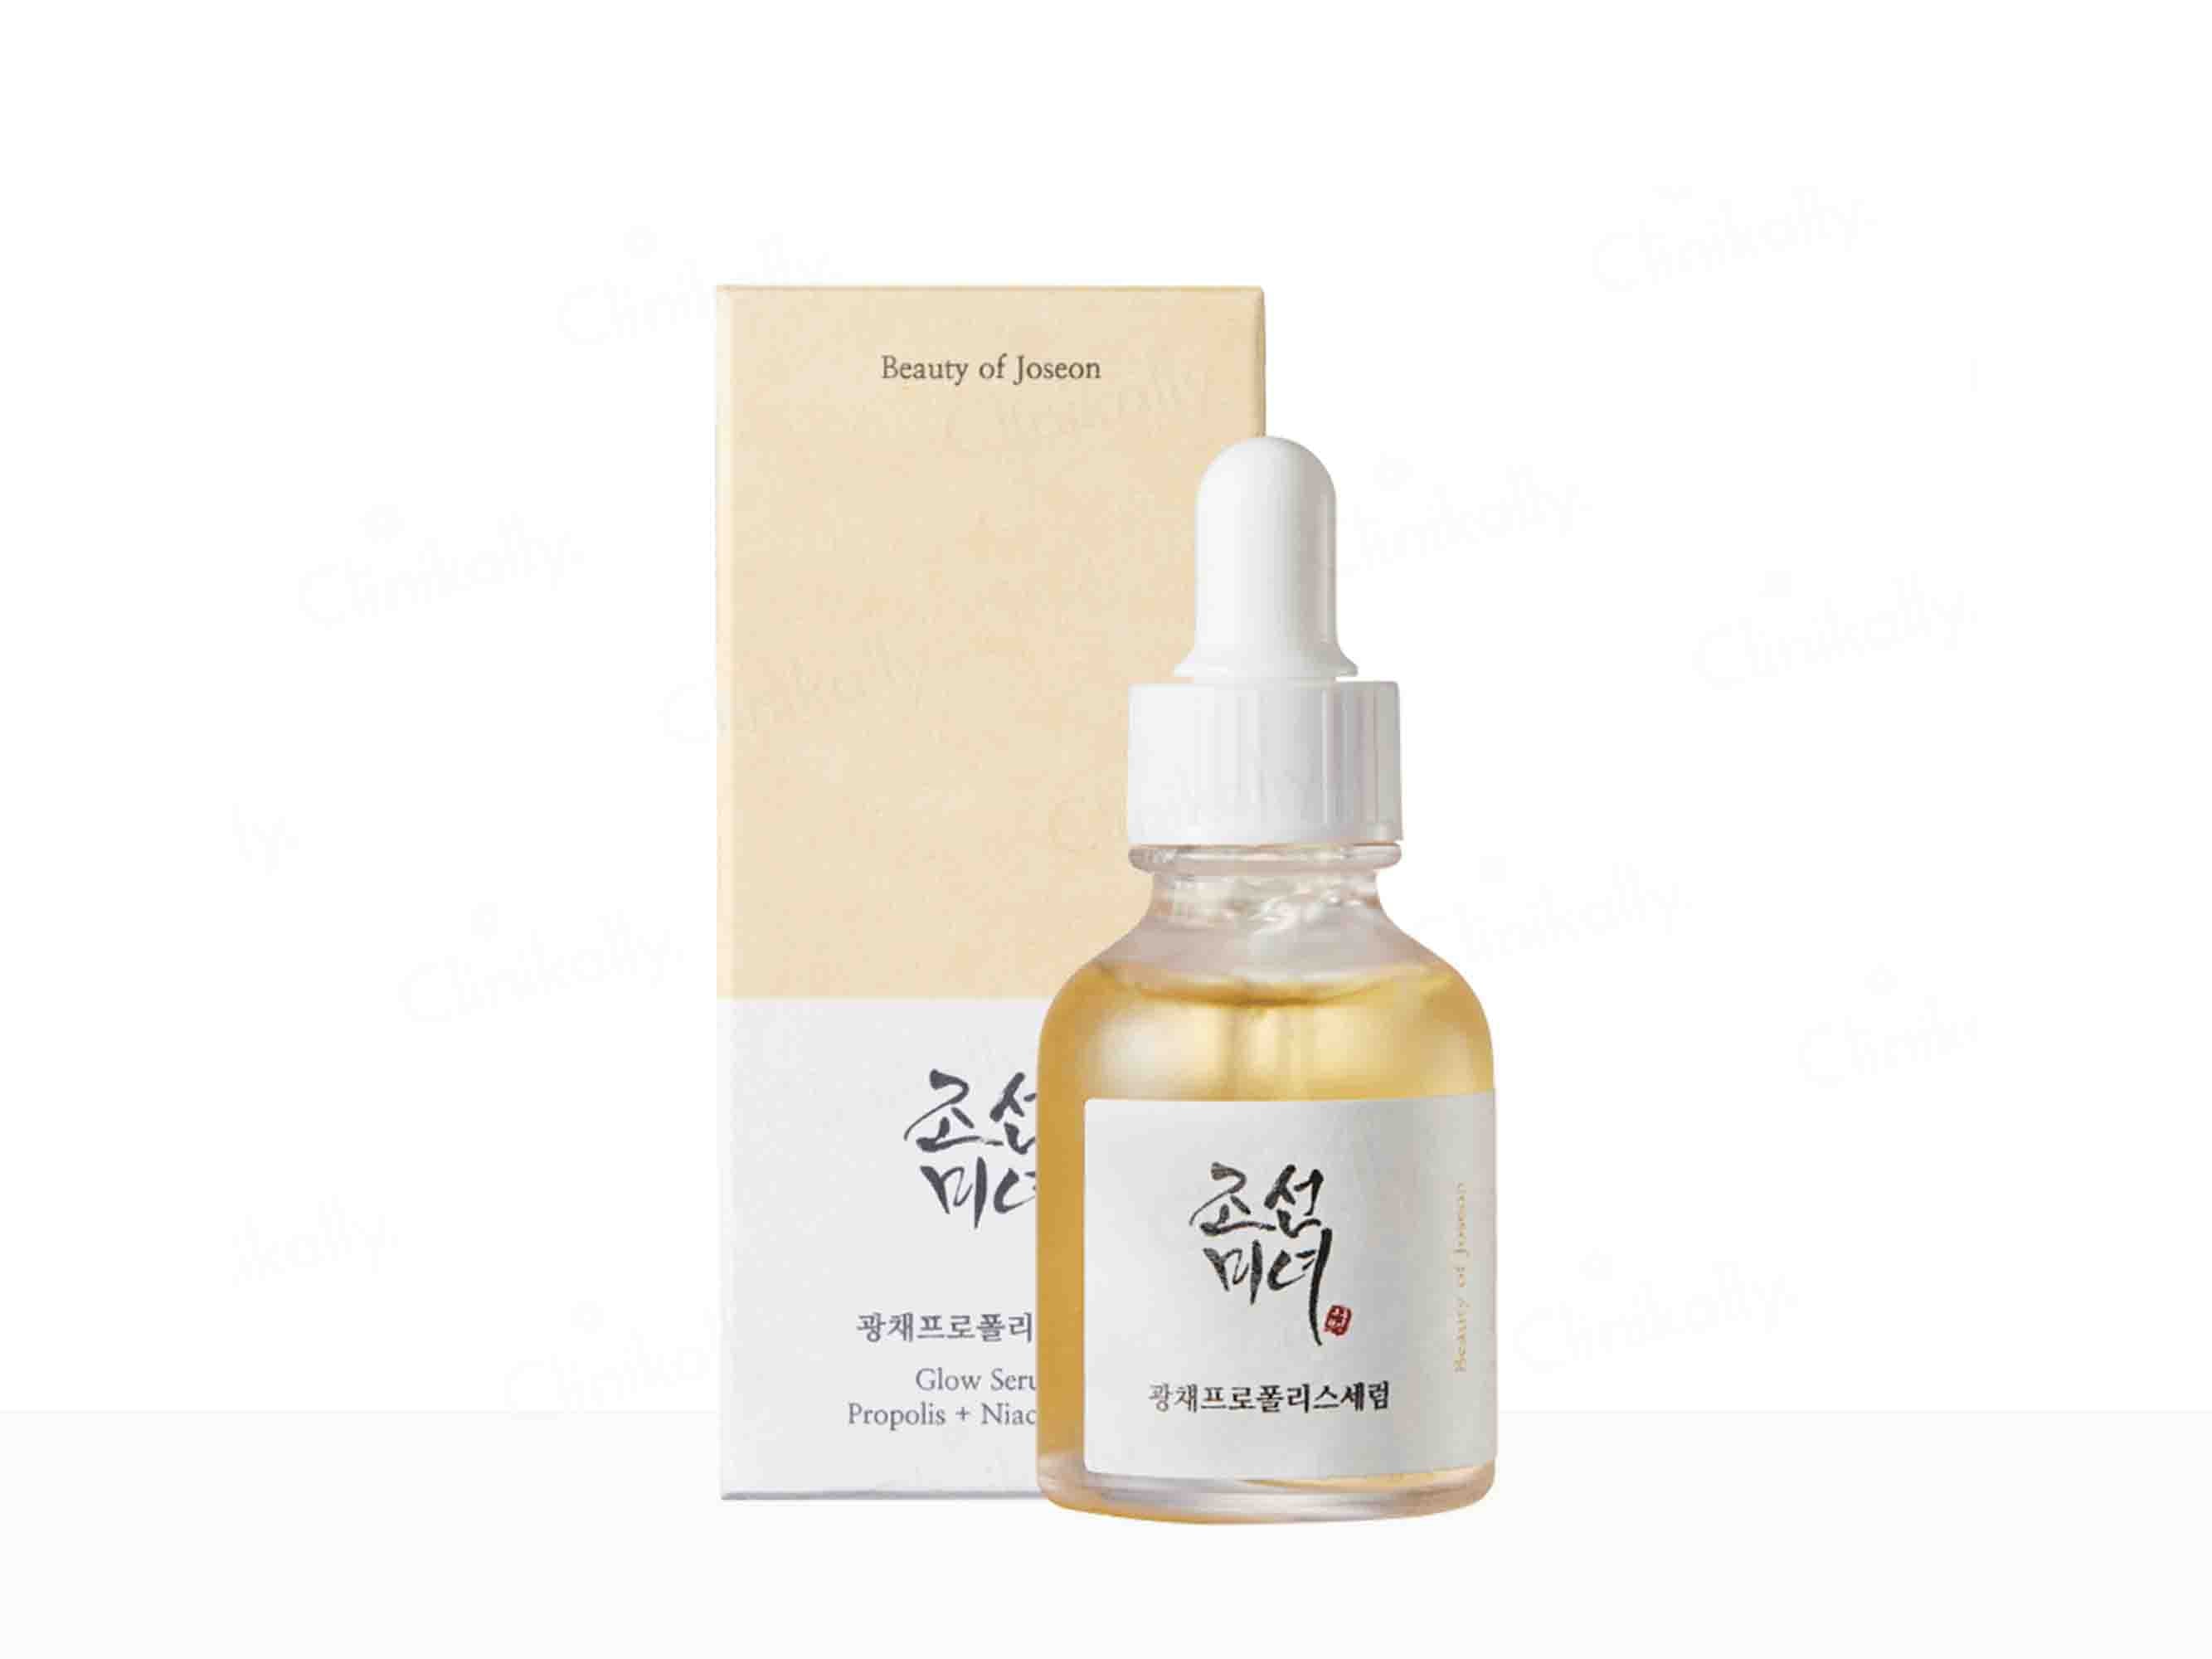 Beauty of Joseon Propolis + Niacinamide Glow Serum